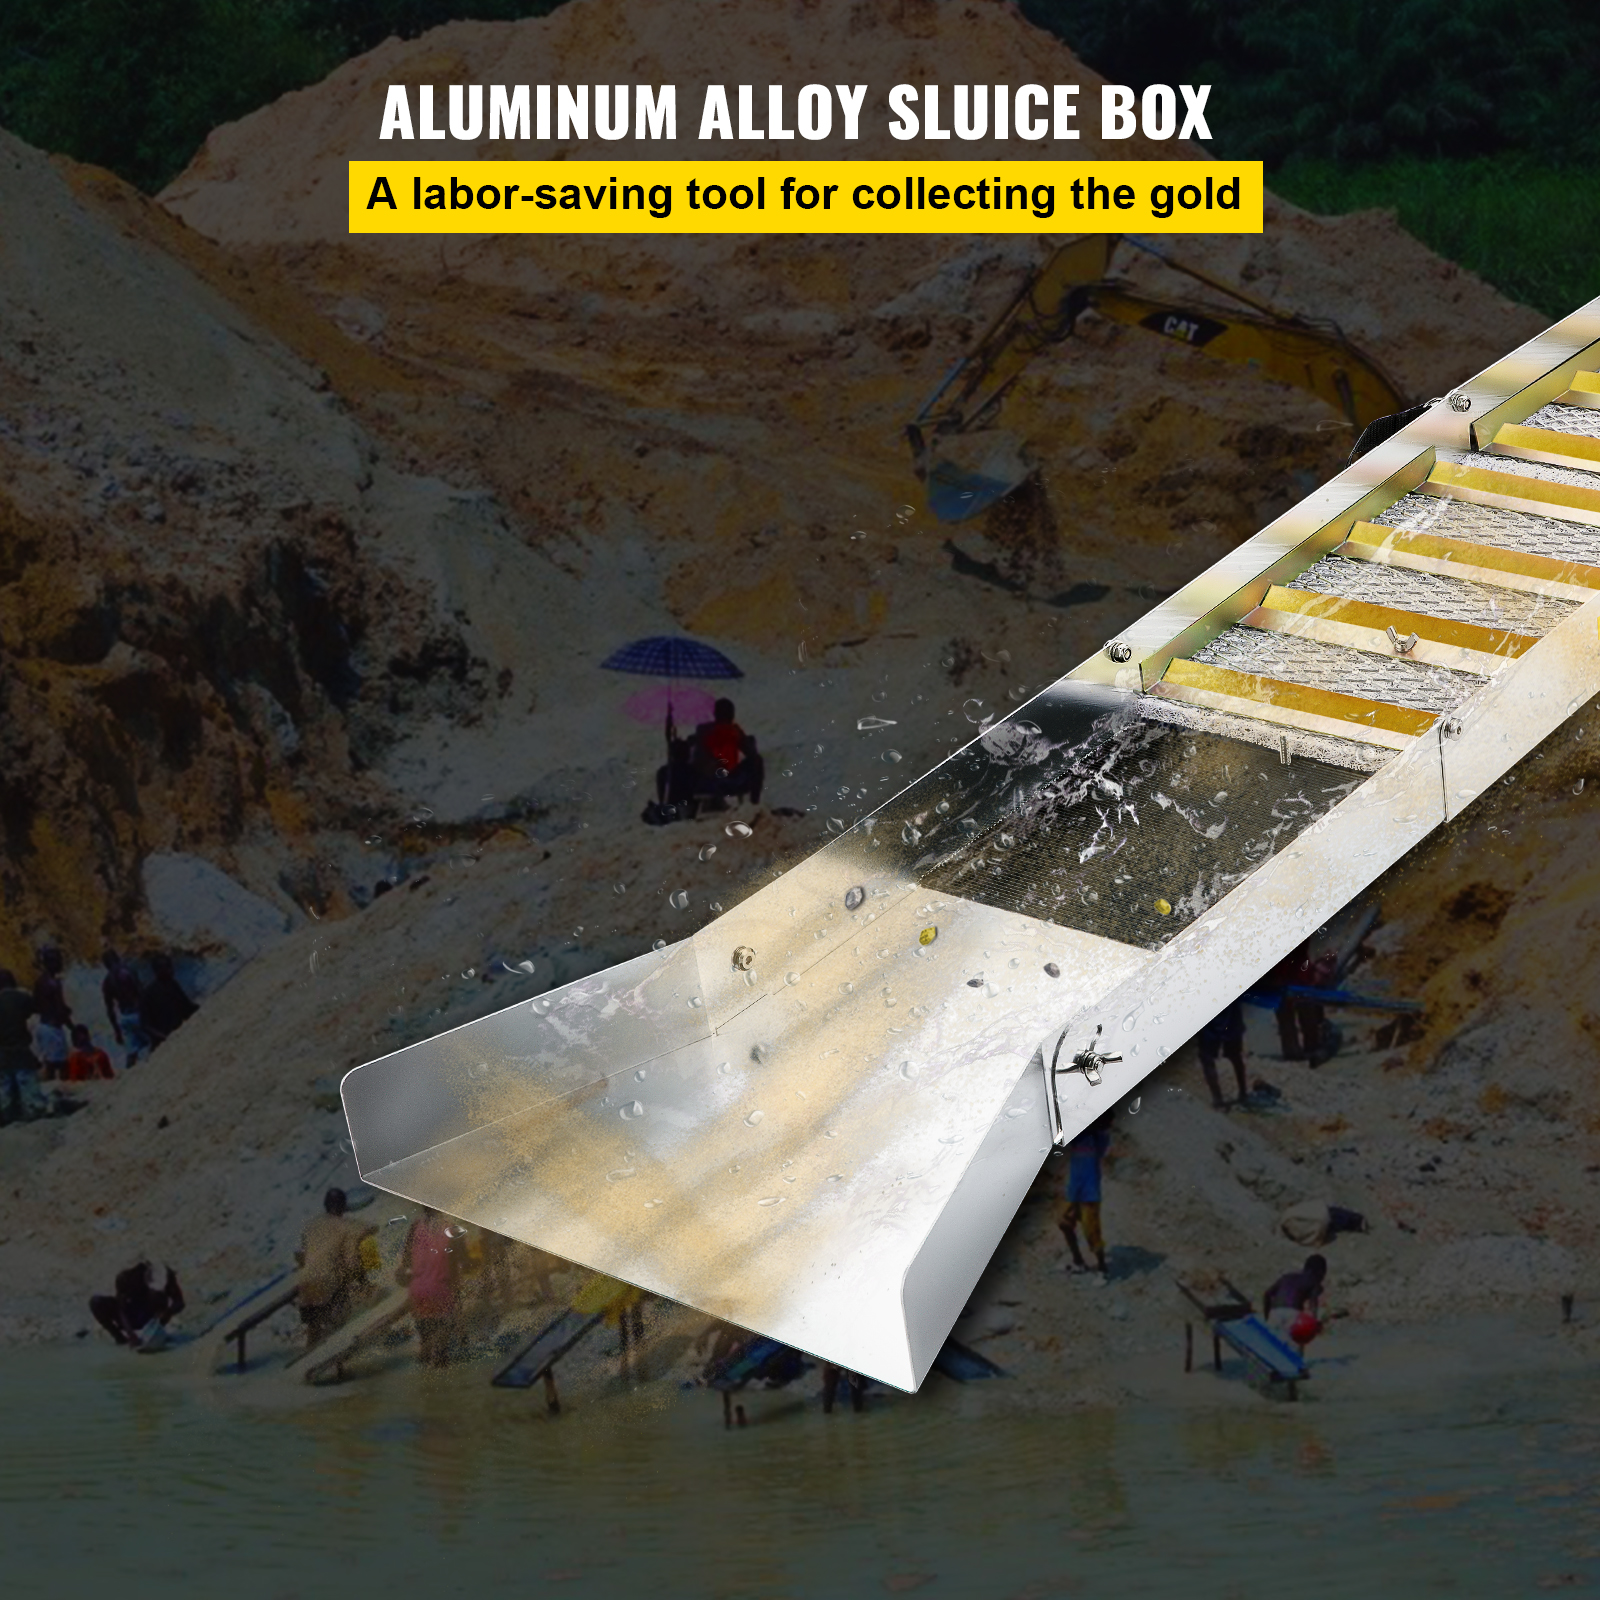 

Vevor Folding Aluminum Alloy Sluice Box, Compact 50" Sluice Boxes For Gold, Lightweight Gold Sluice Equipment, Portable Sluice Boxes With Miner's Moss, River, Creek, Gold , Prospecting, Dredgin